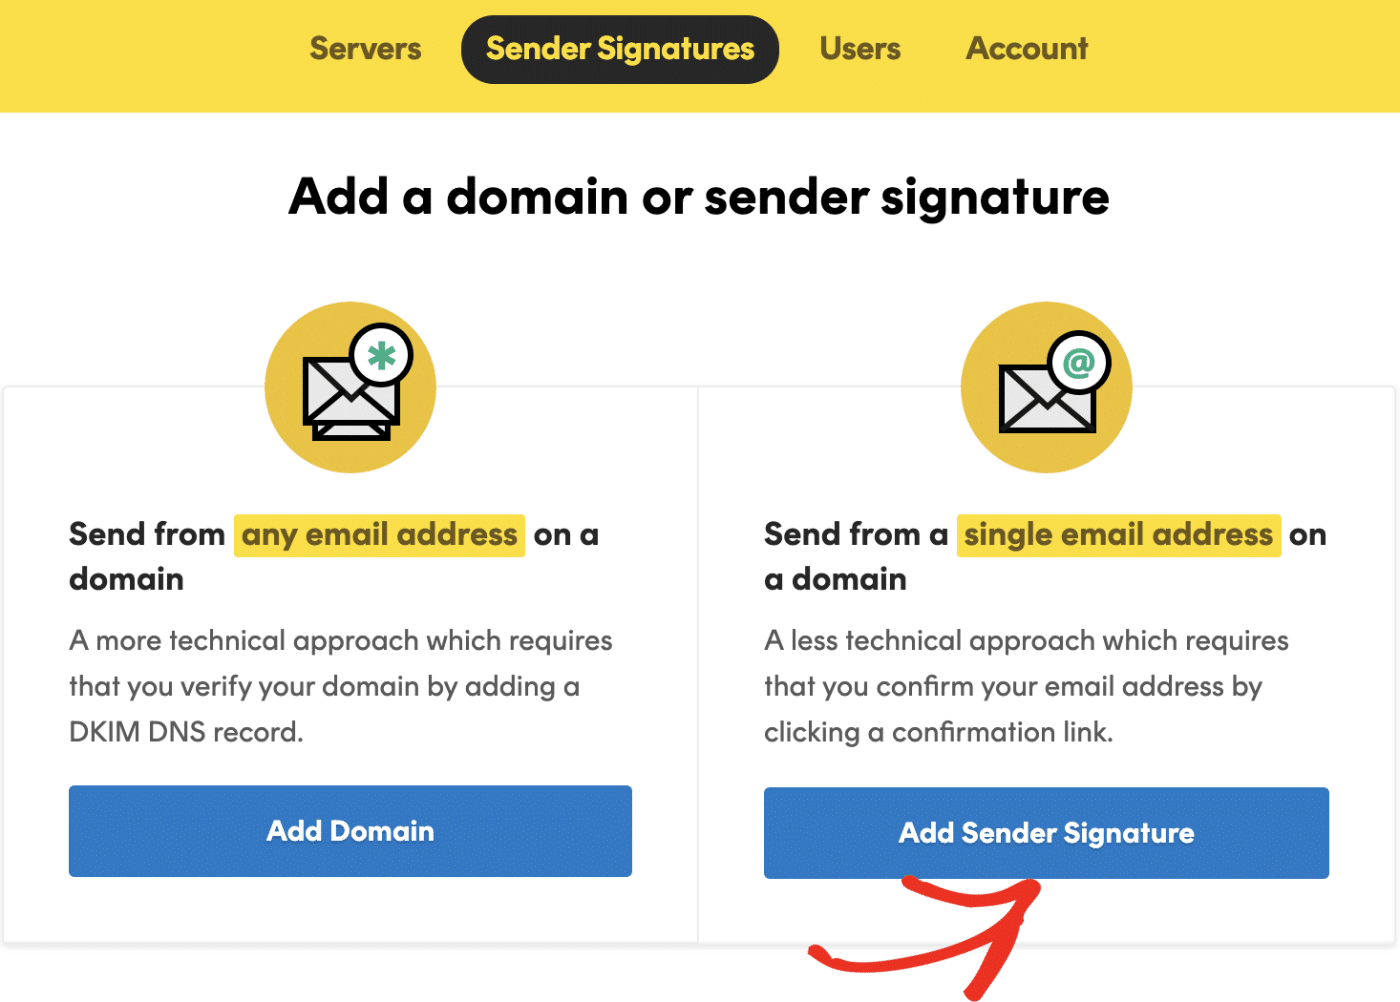 Add sender signature